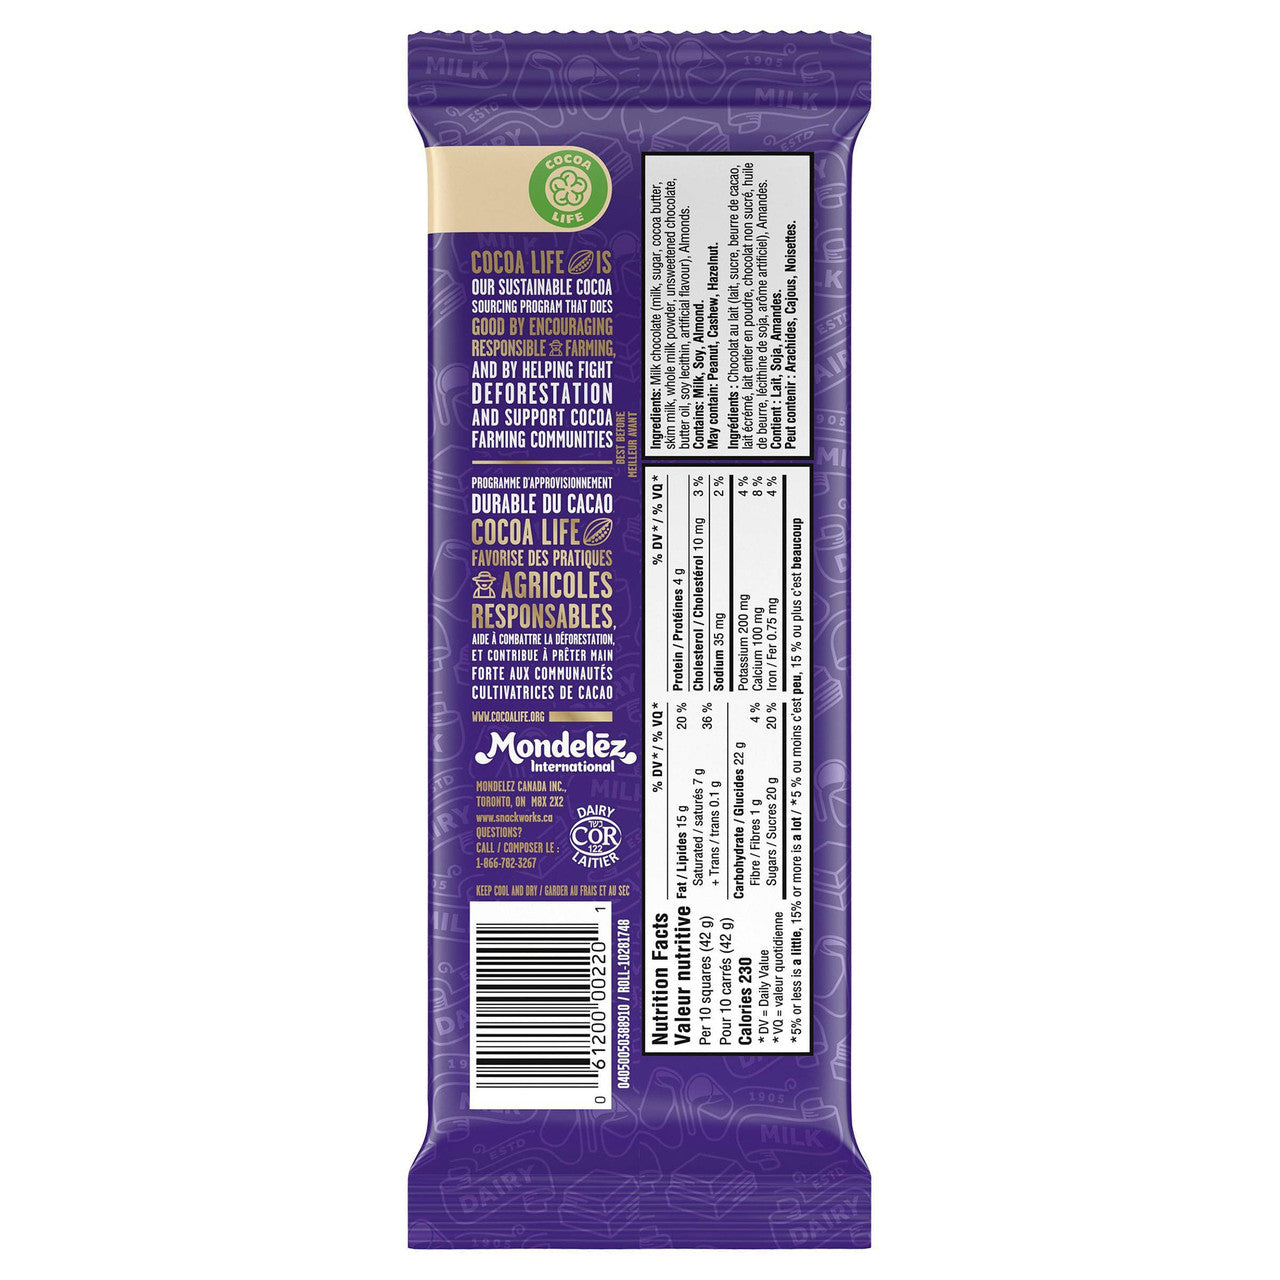 Cadbury, Dairy Milk Almond, Chocolate Bar, 100g/3.5oz., {Imported from Canada}